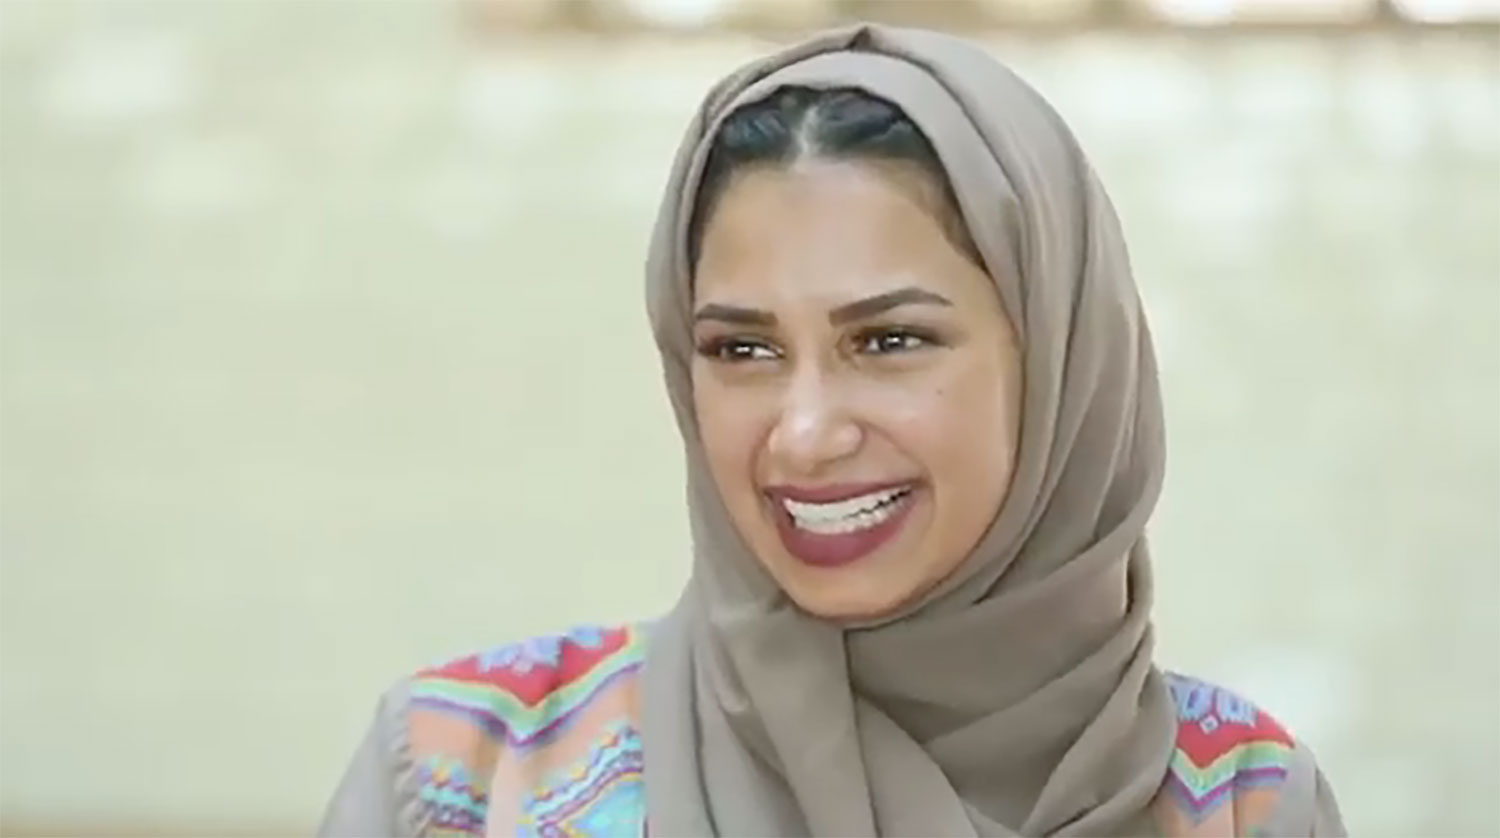 Saudi Woman Smiling